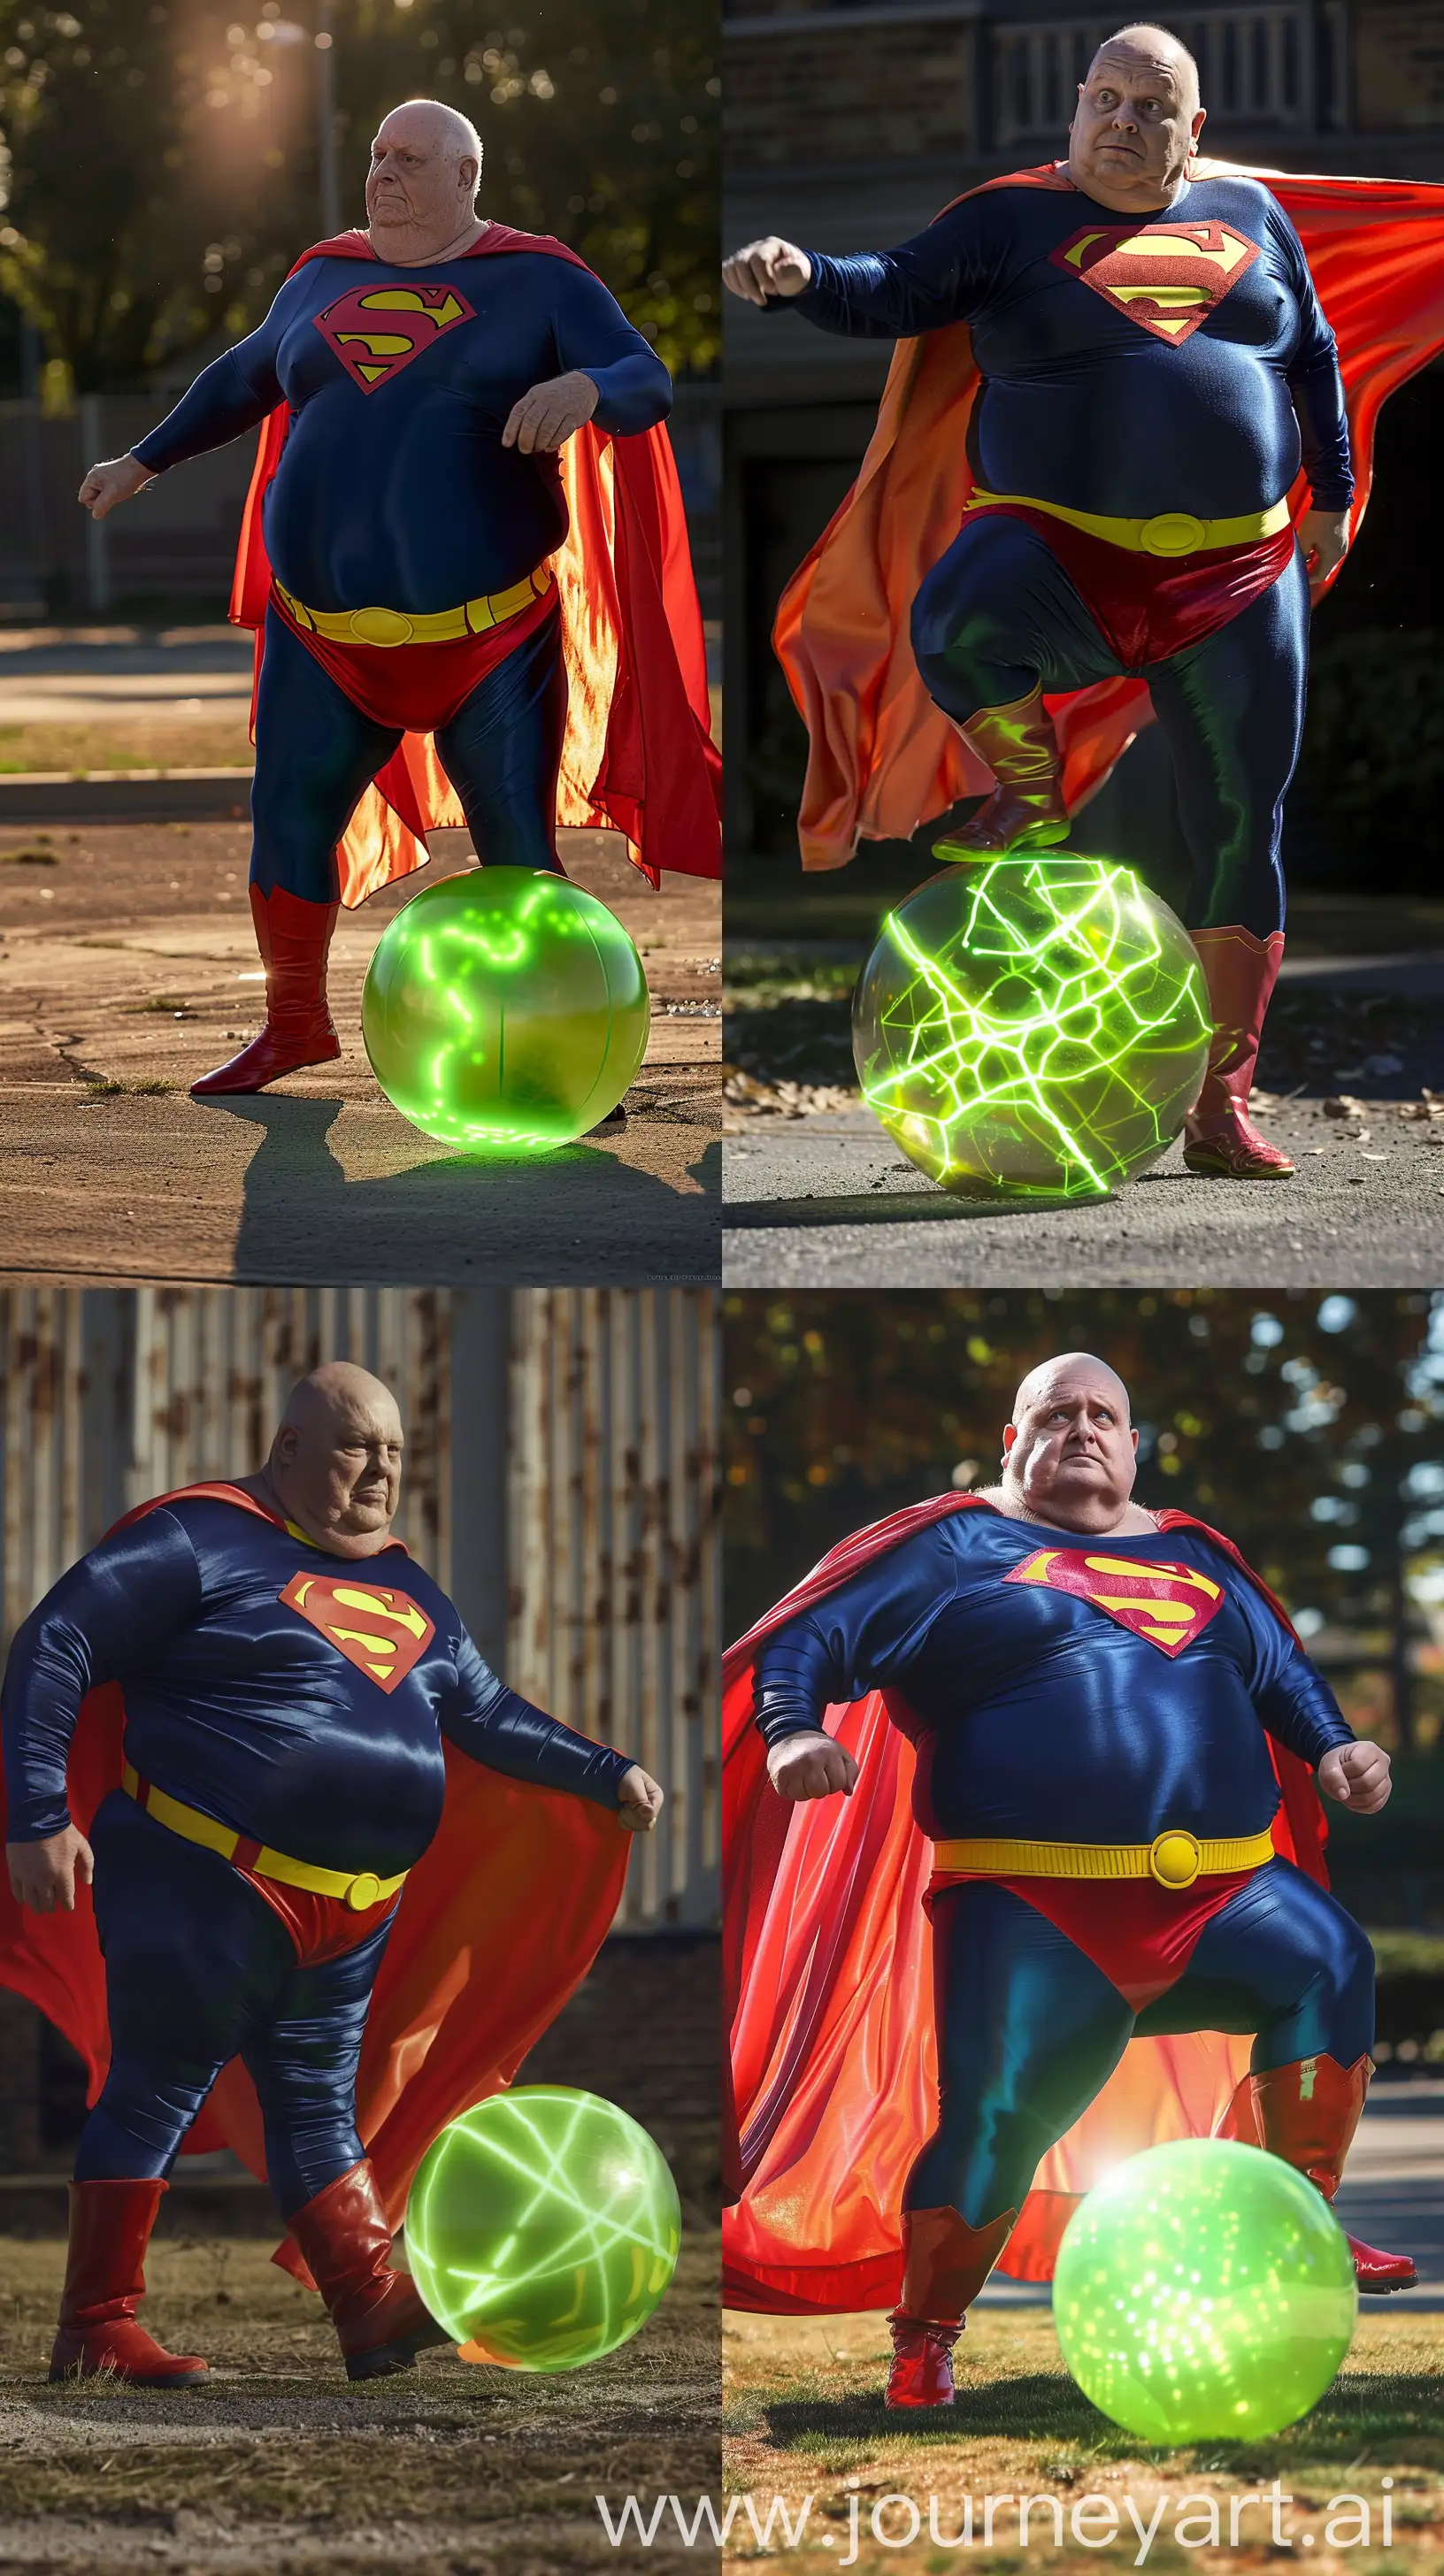 Senior-Man-in-Superman-Costume-Kicking-Neon-Green-Ball